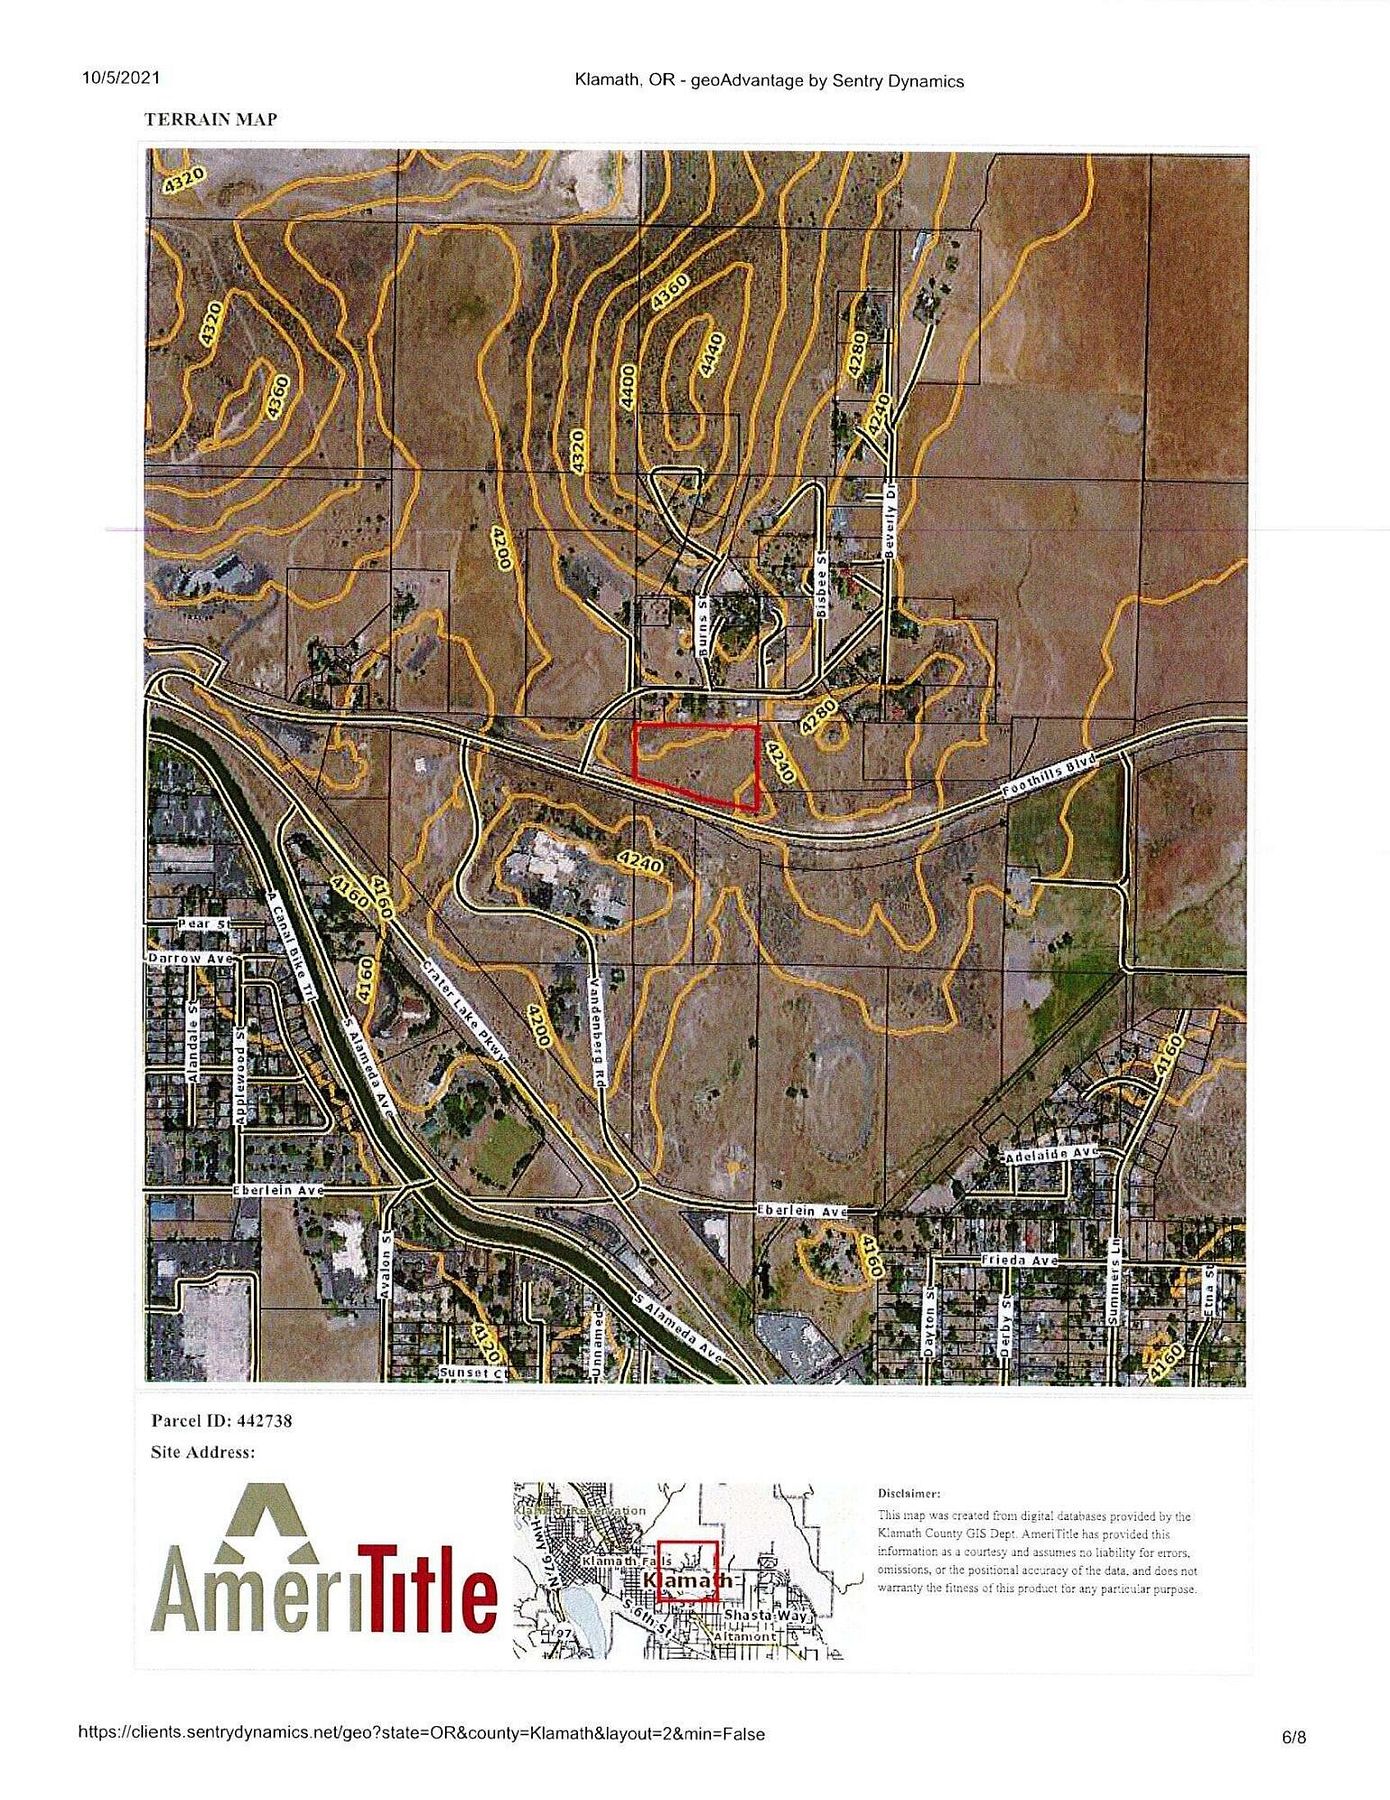 5.7 Acres of Residential Land for Sale in Klamath Falls, Oregon